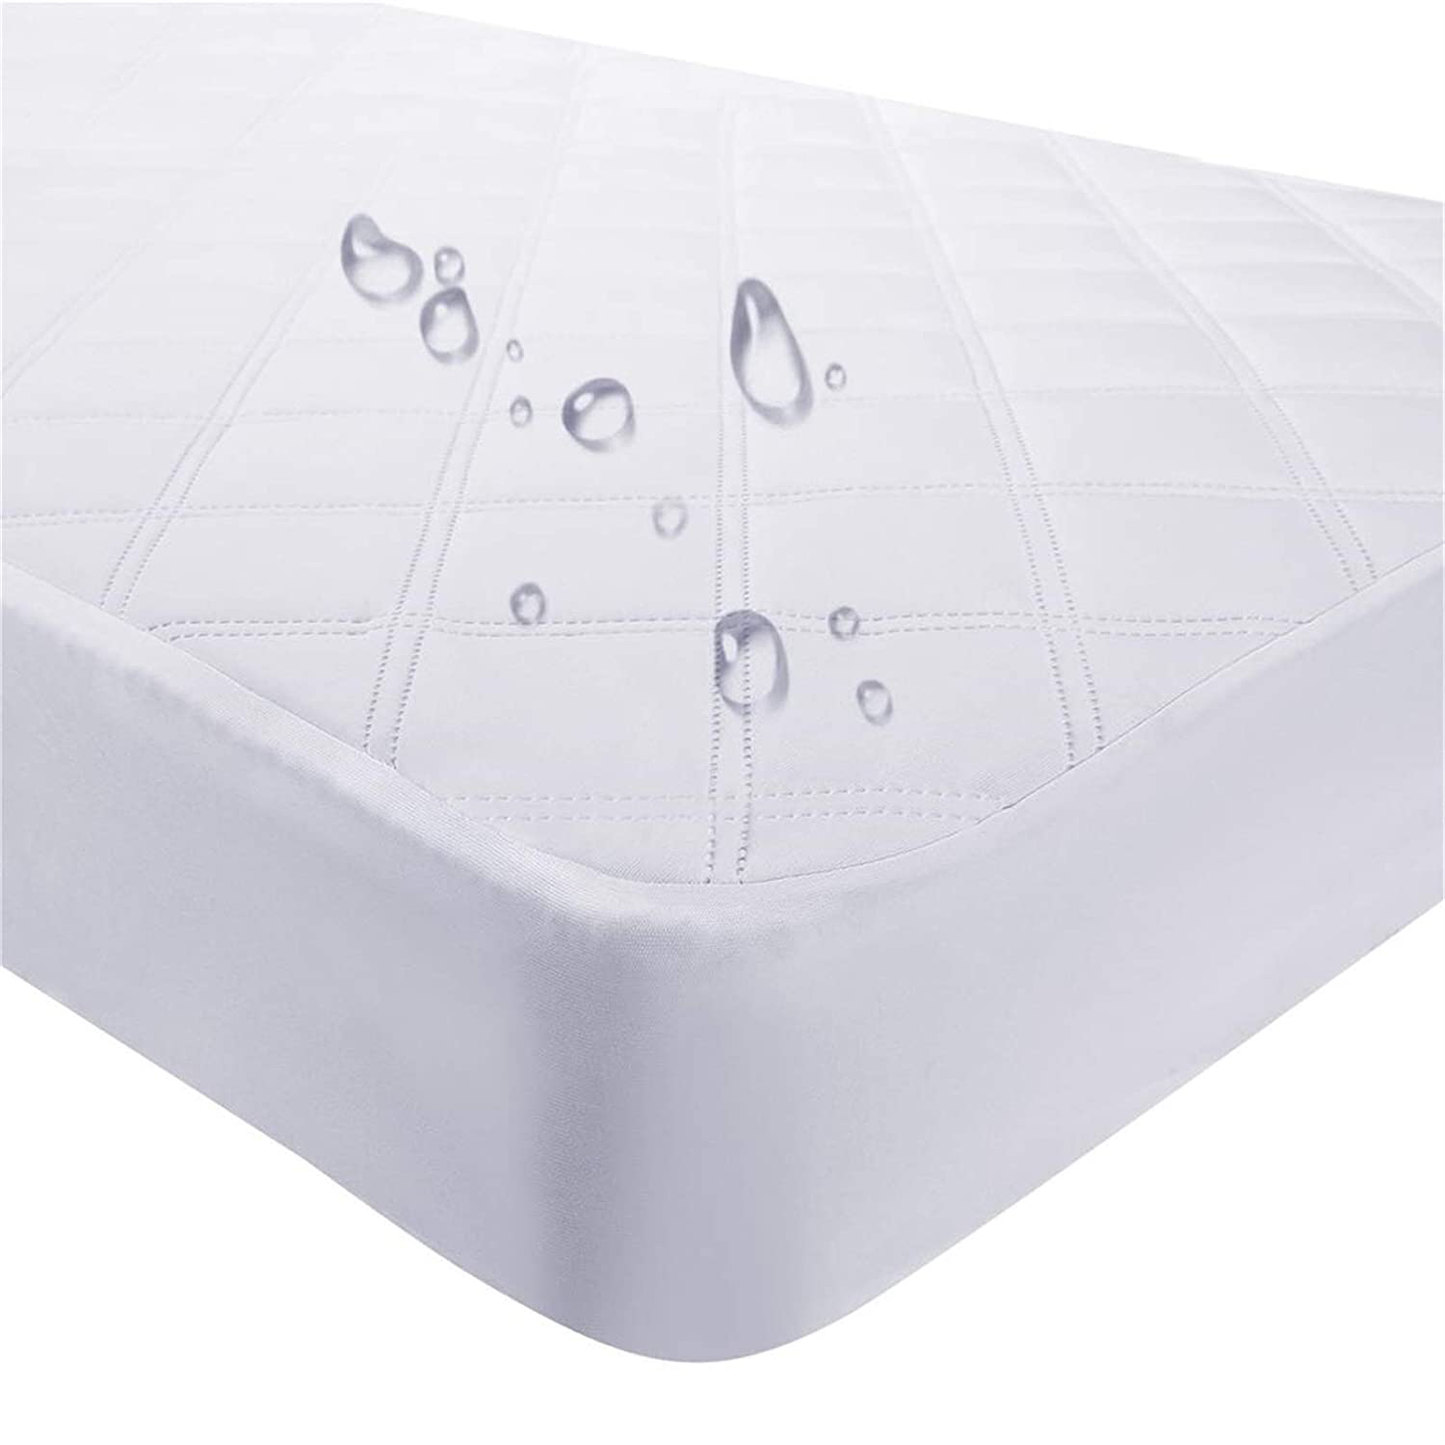 YOOFOSS Pack N Play Mattress Cover Waterproof Crib Mattress Pad Protector Fits Most Baby Playard, Mini Crib and Foldable Mattresses (White, 39''x27'')